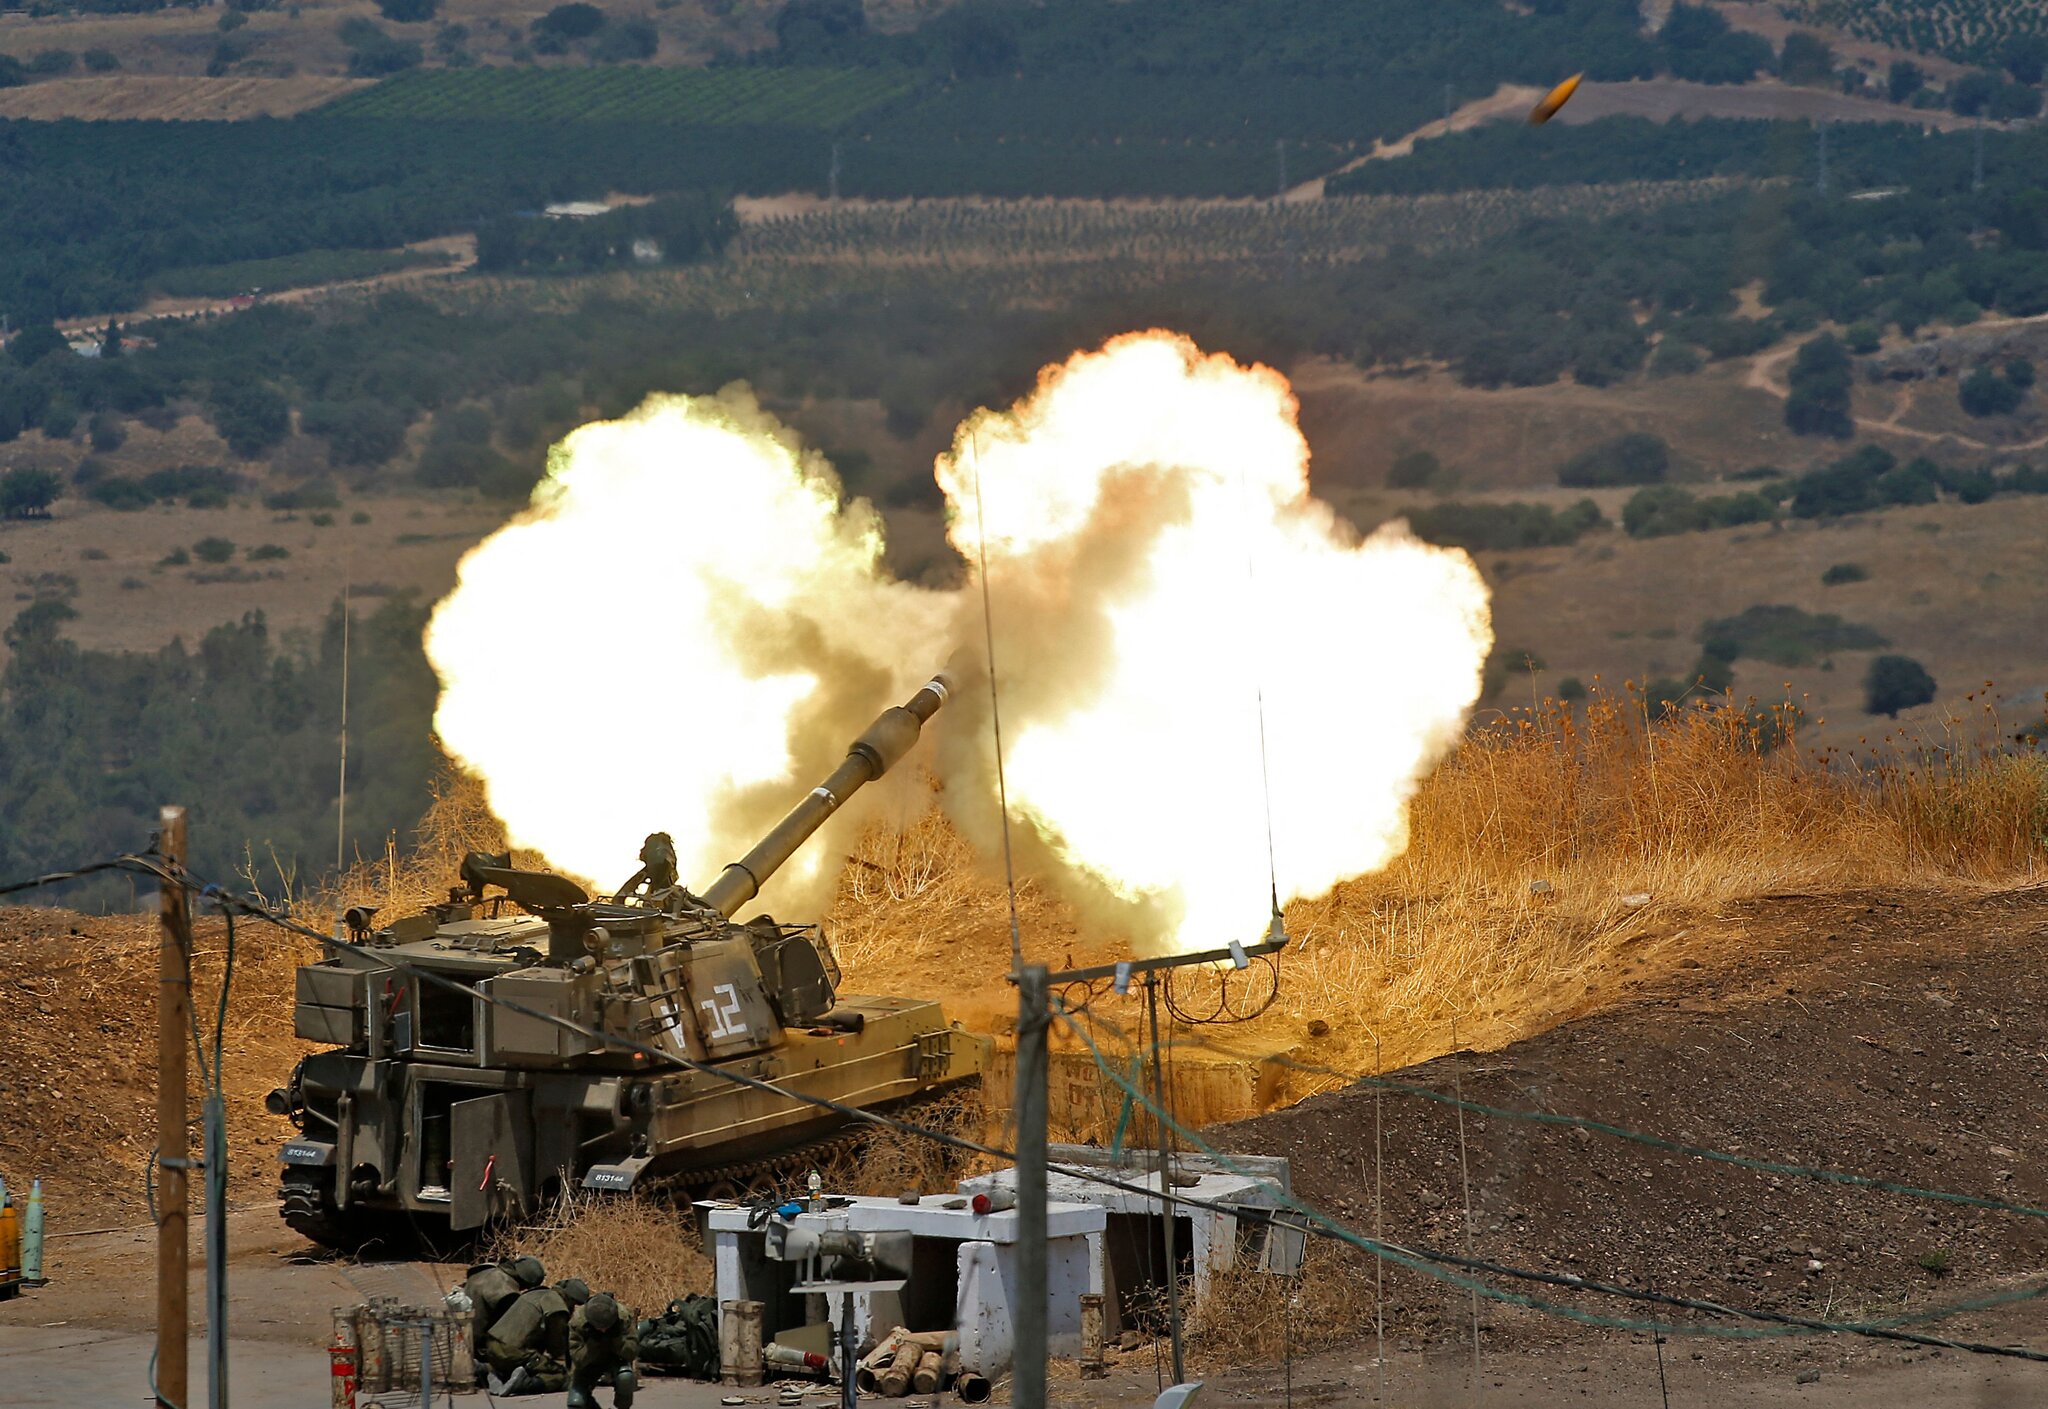 Hezbollah, Israel trade fire in dangerous Mideast escalation